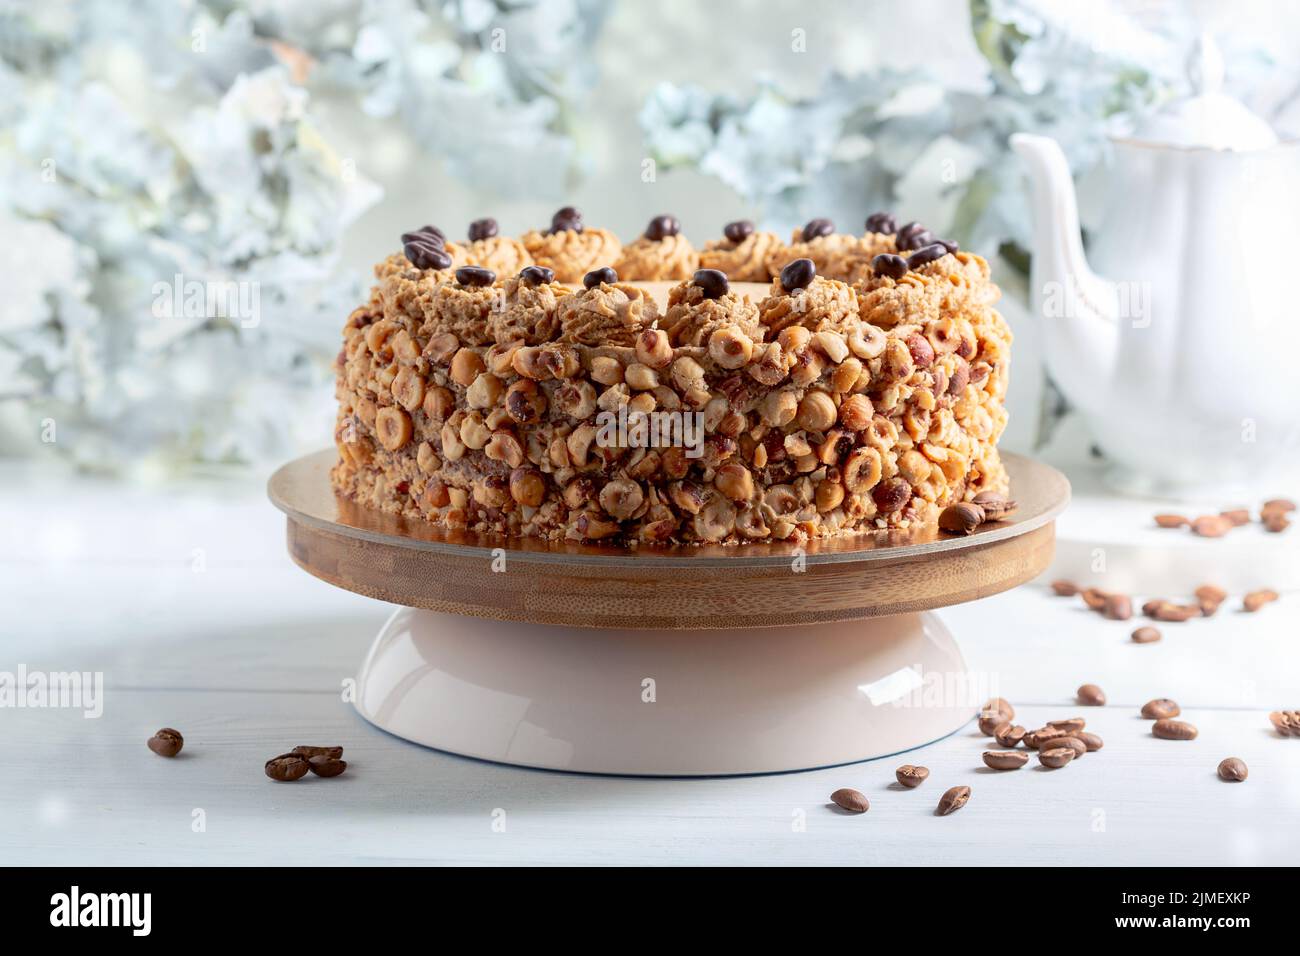 Homemade coffee cake with hazelnuts. Stock Photo